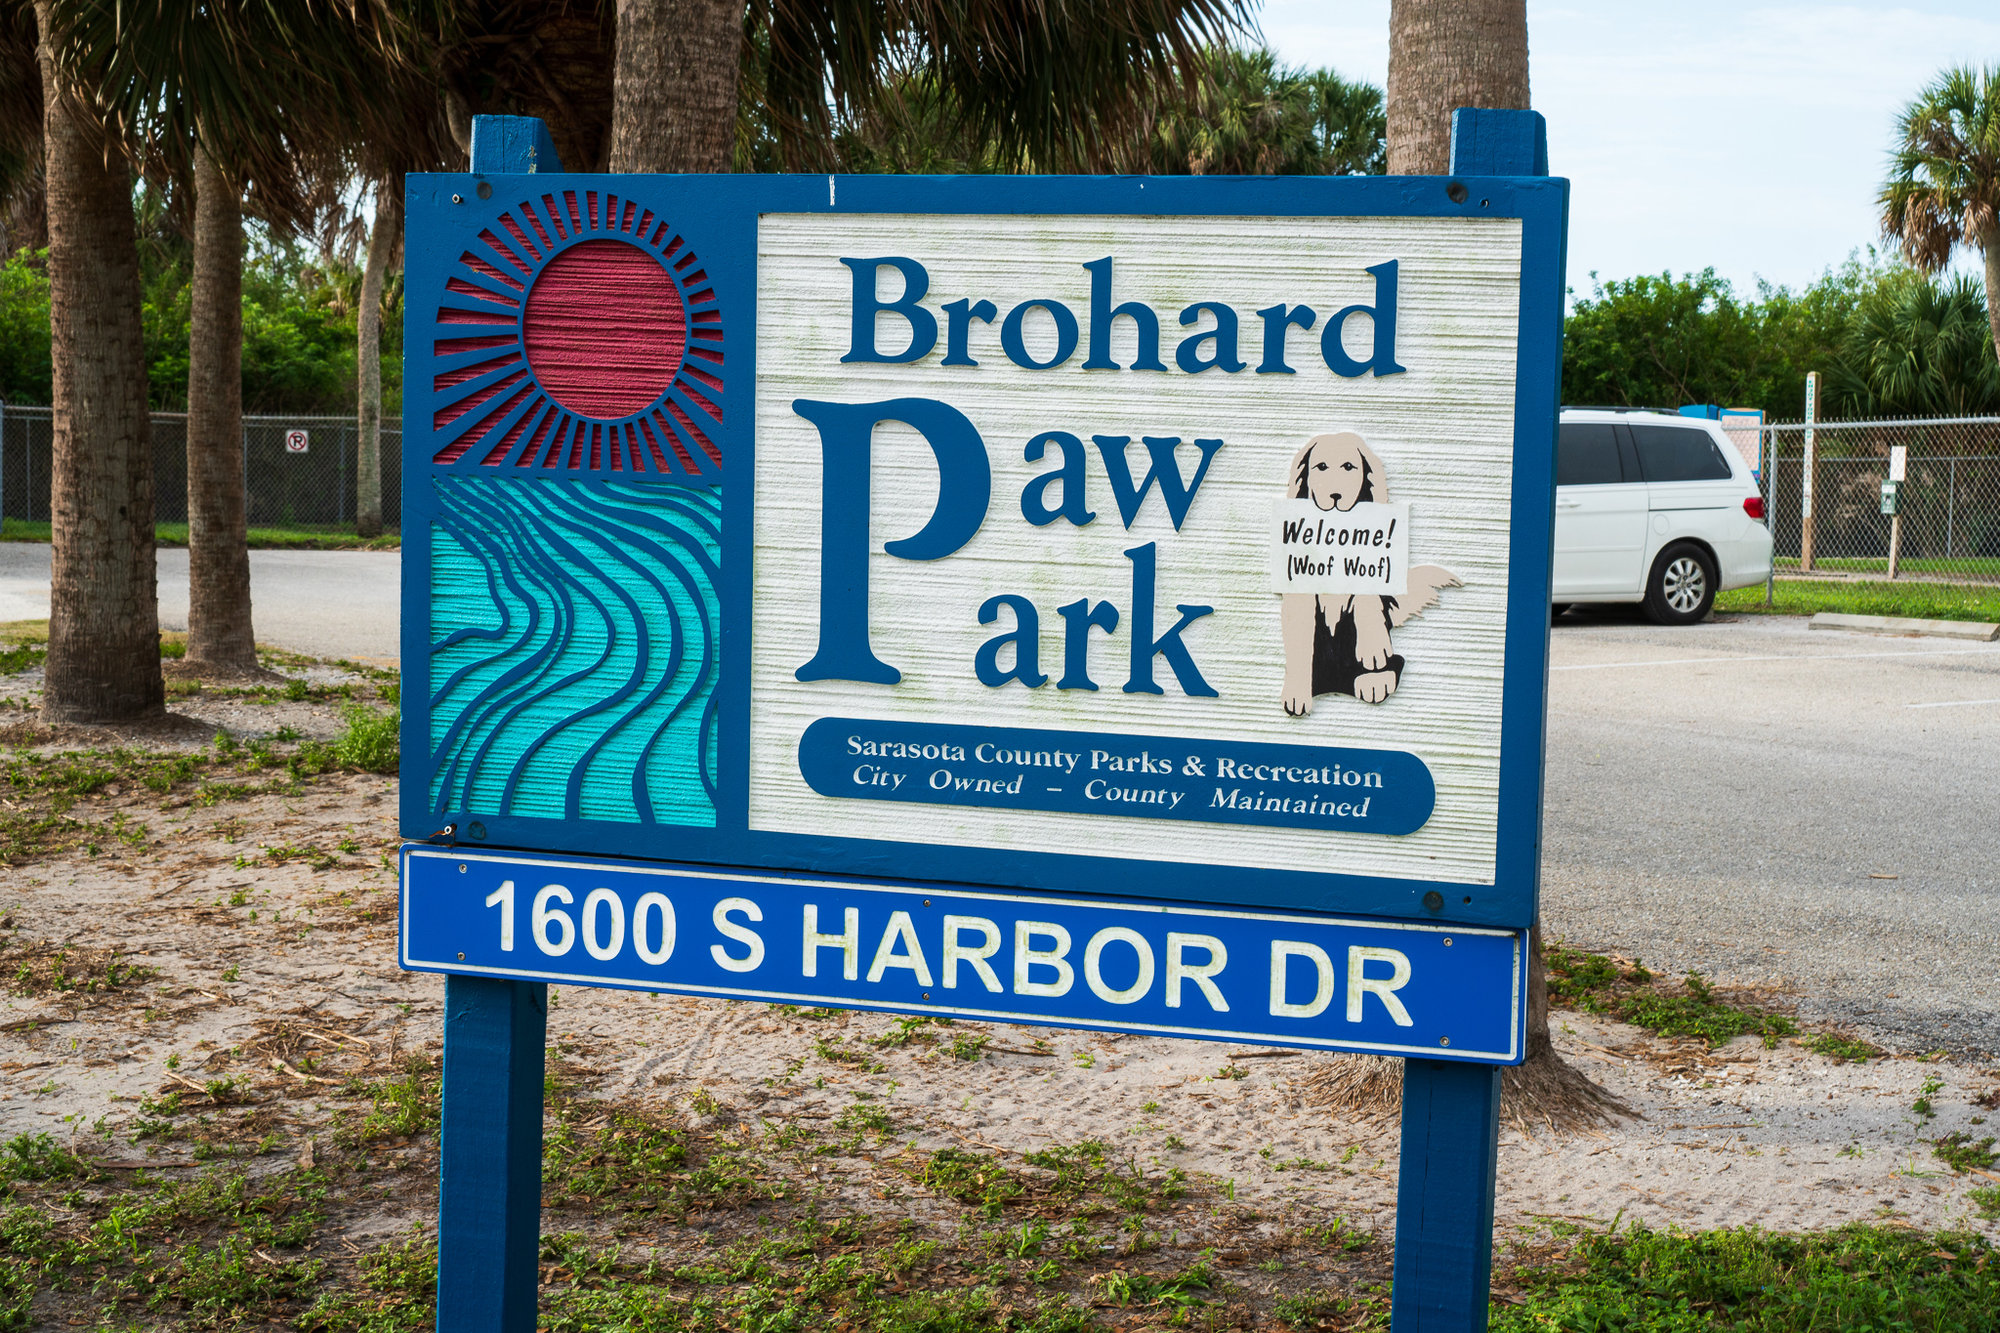 Brohard Beach and Paw Park Sign